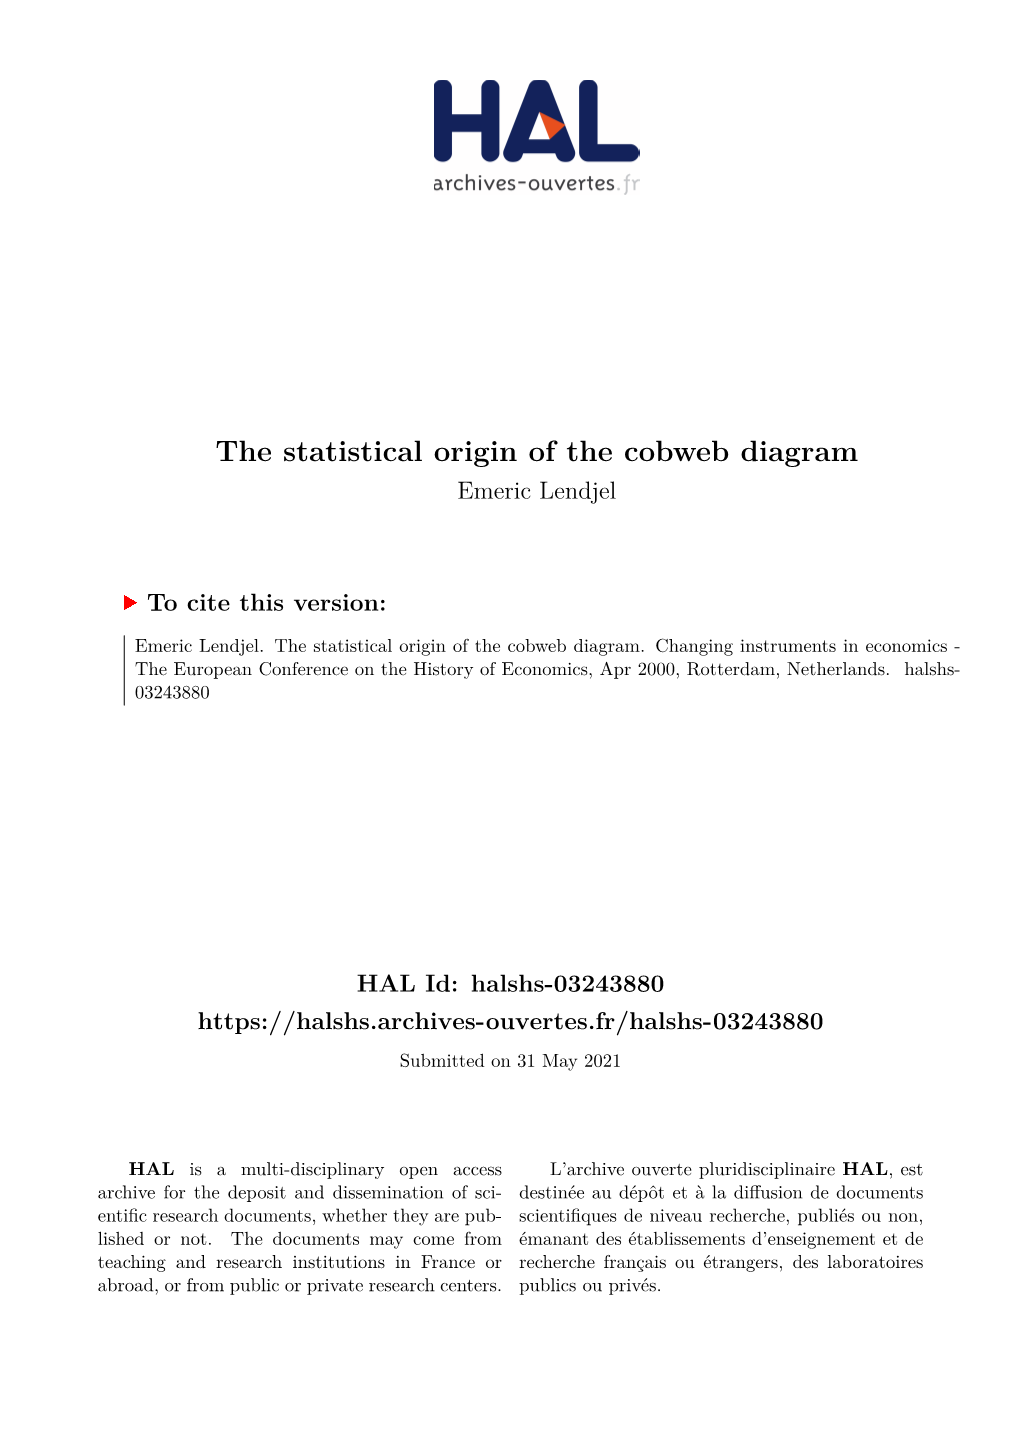 The Statistical Origin of the Cobweb Diagram Emeric Lendjel